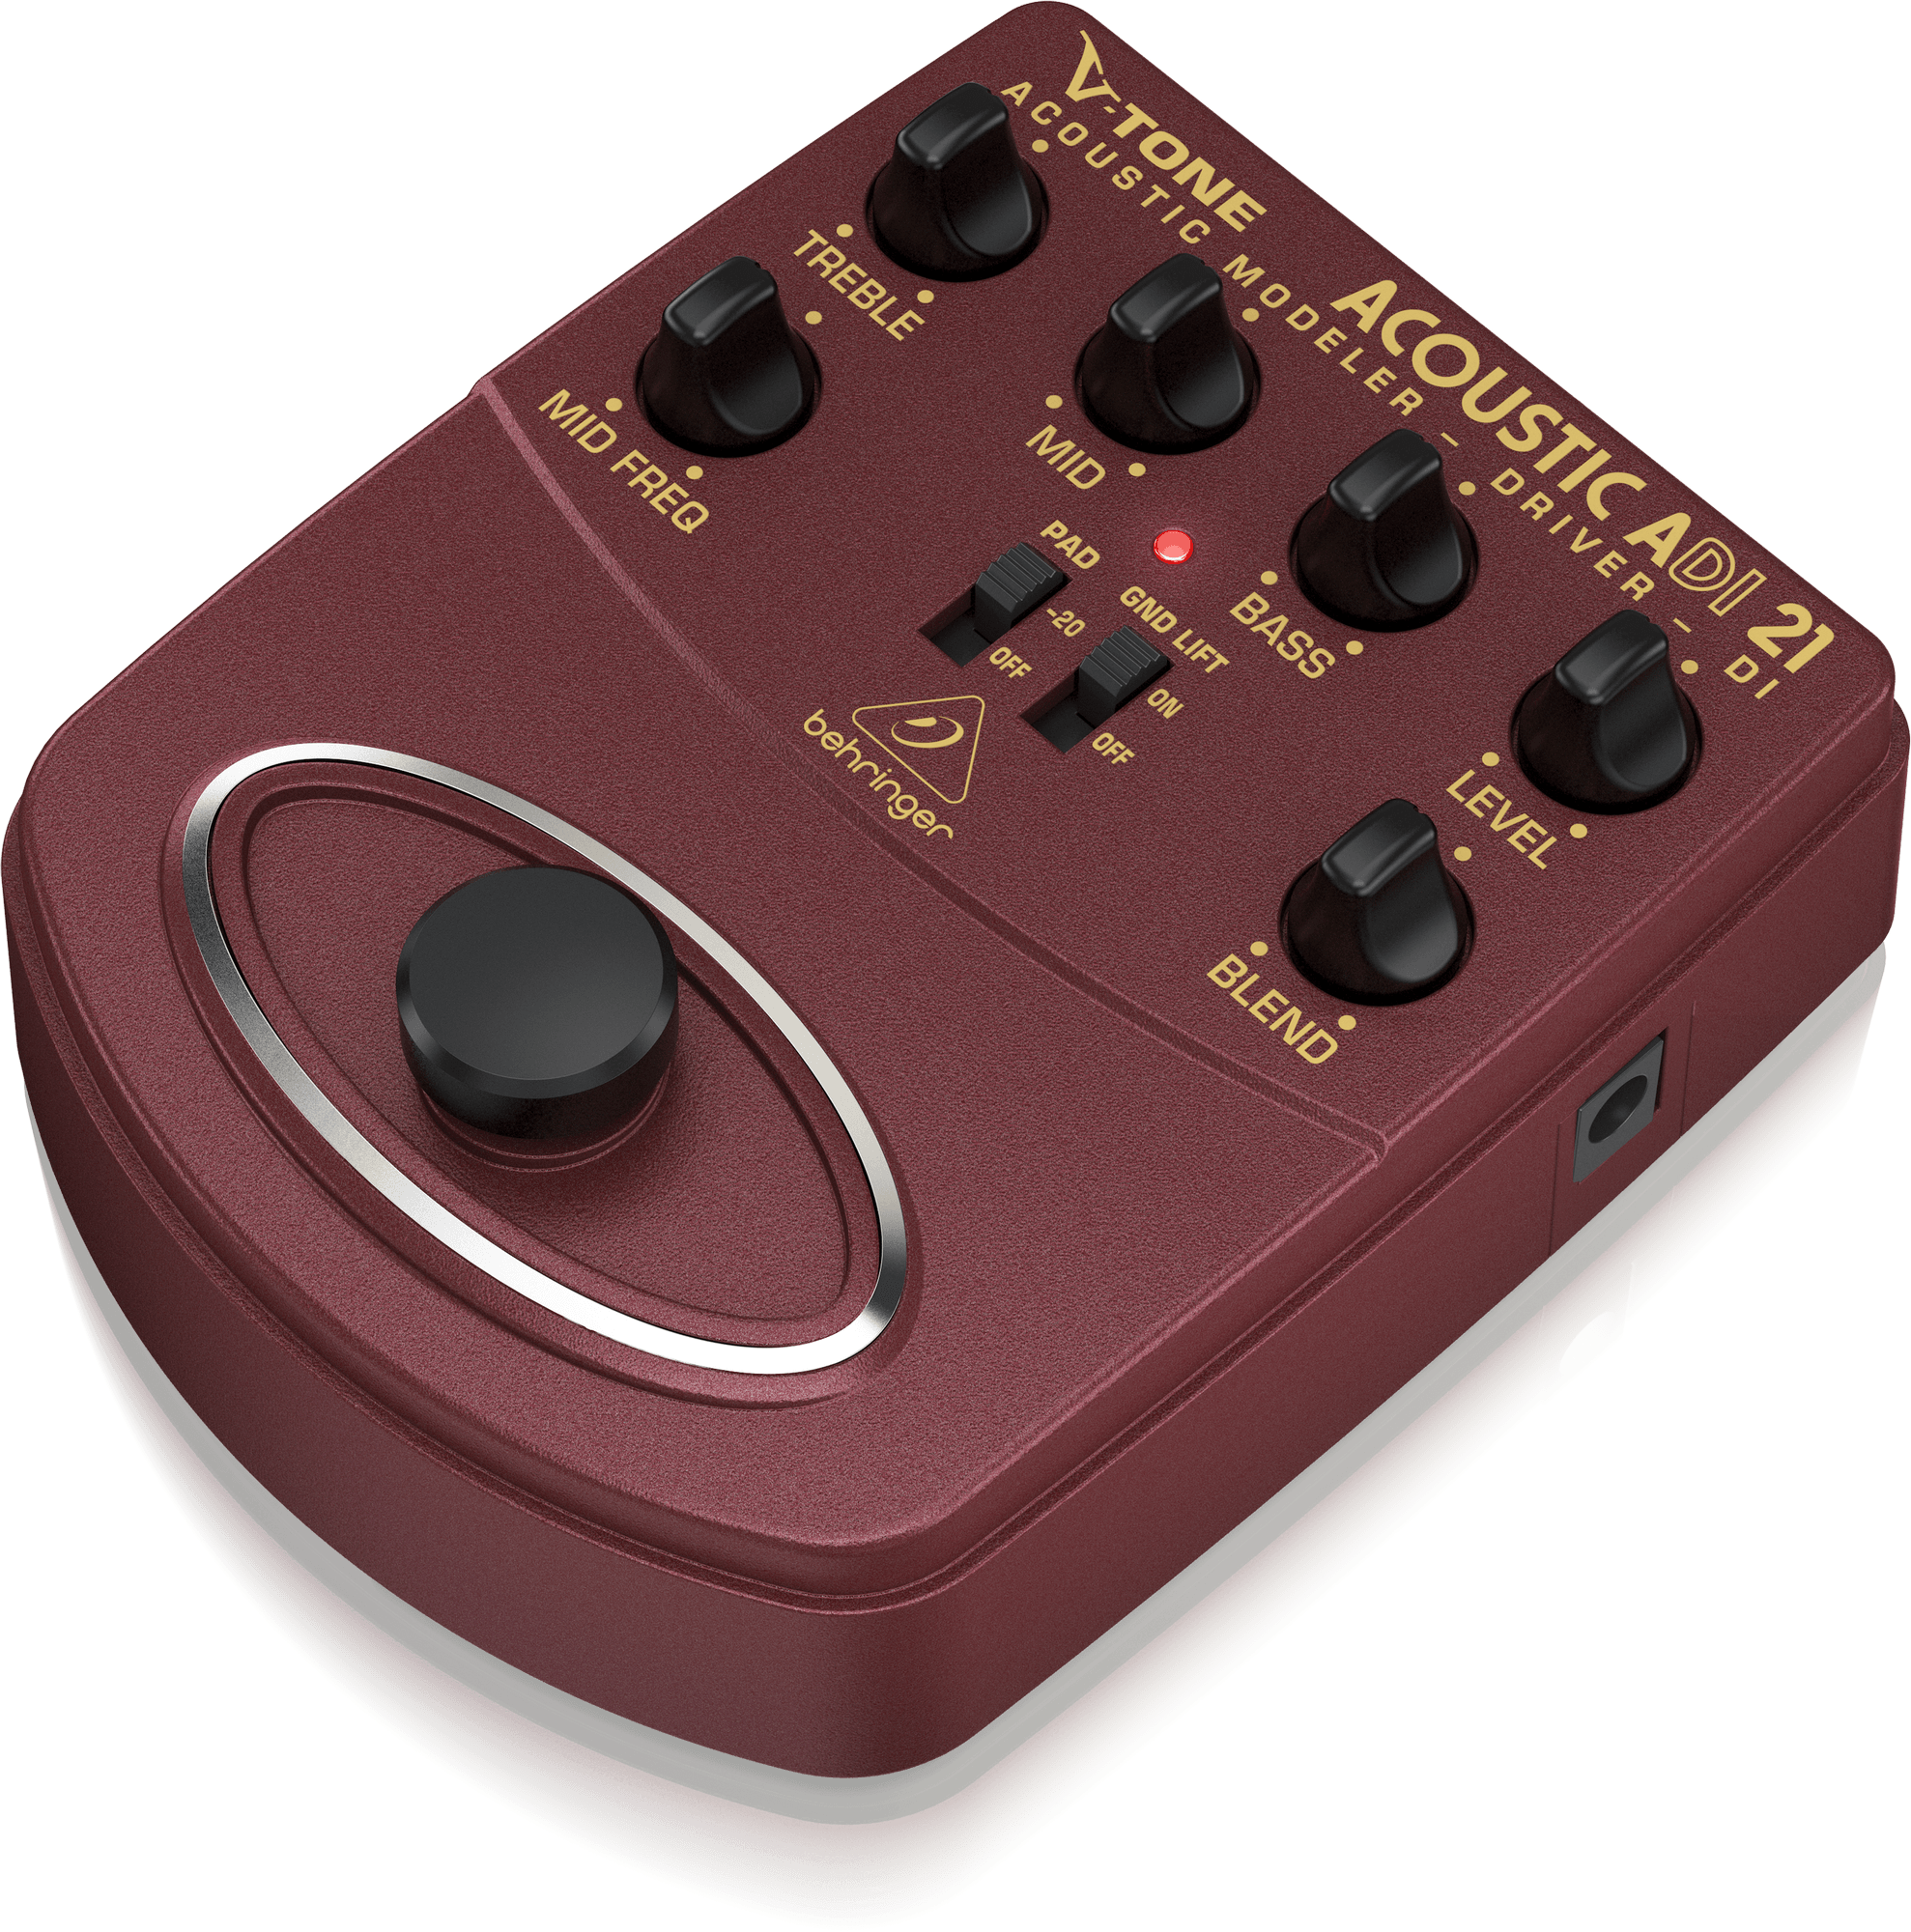 Behringer ADI21 Acoustic Amp Modeler/Direct Recording Preamp/Di Box | BEHRINGER , Zoso Music